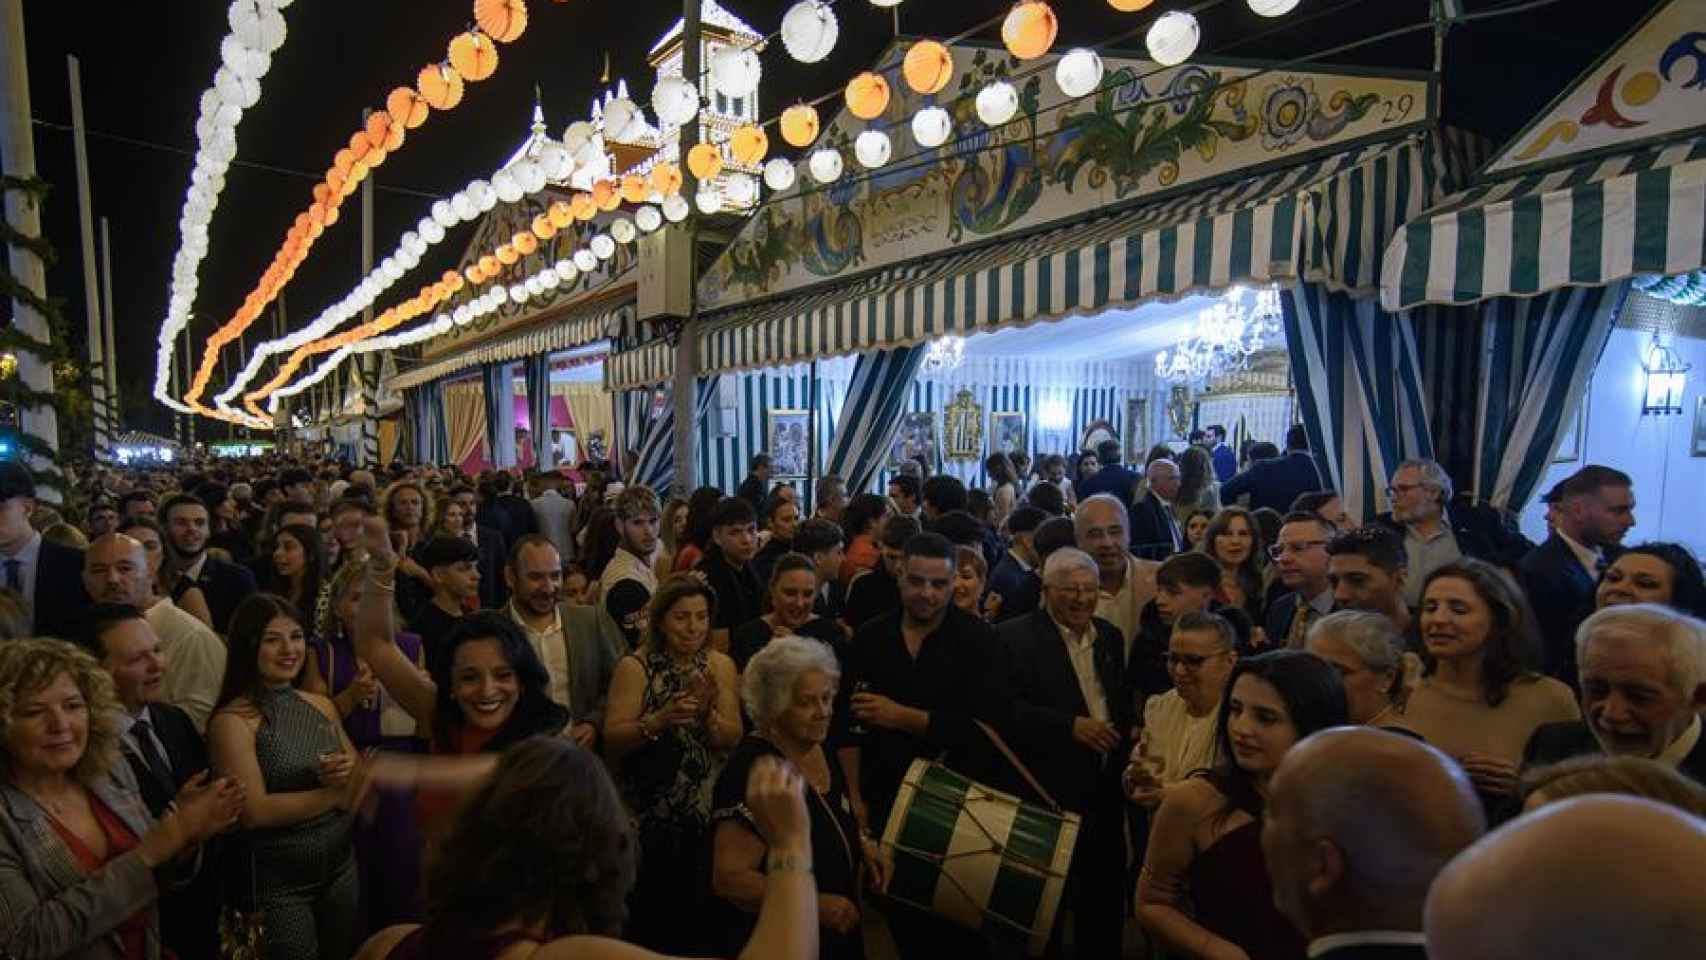 En imágenes, la cena del 'pescaito' inaugura la primera noche masiva en la Feria de Sevilla